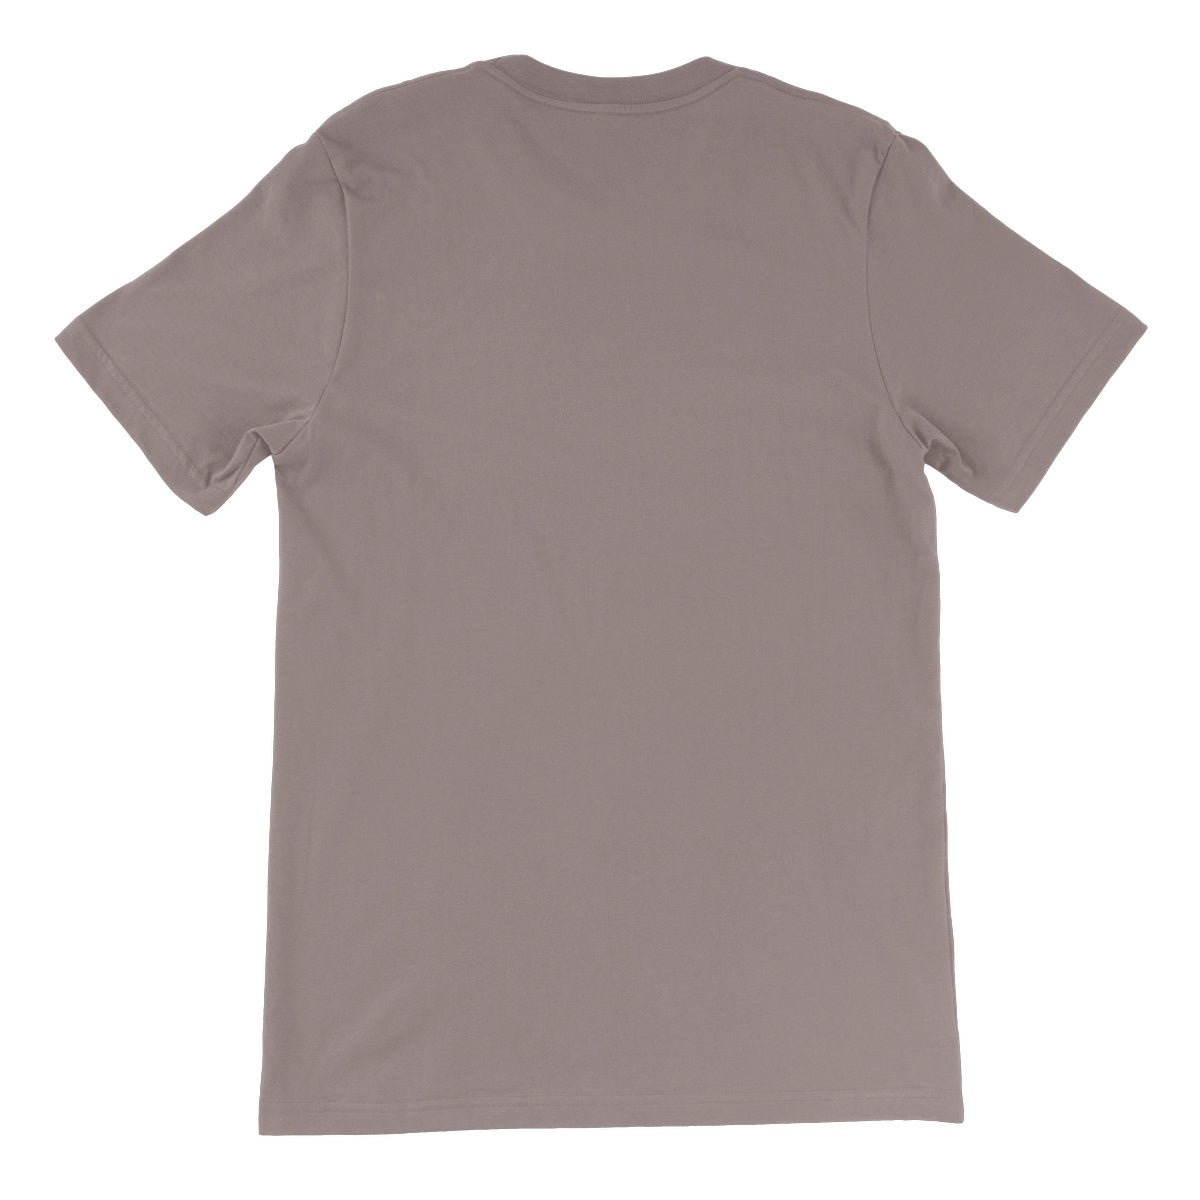 CxE Check Your Head Unisex Short Sleeve T-Shirt